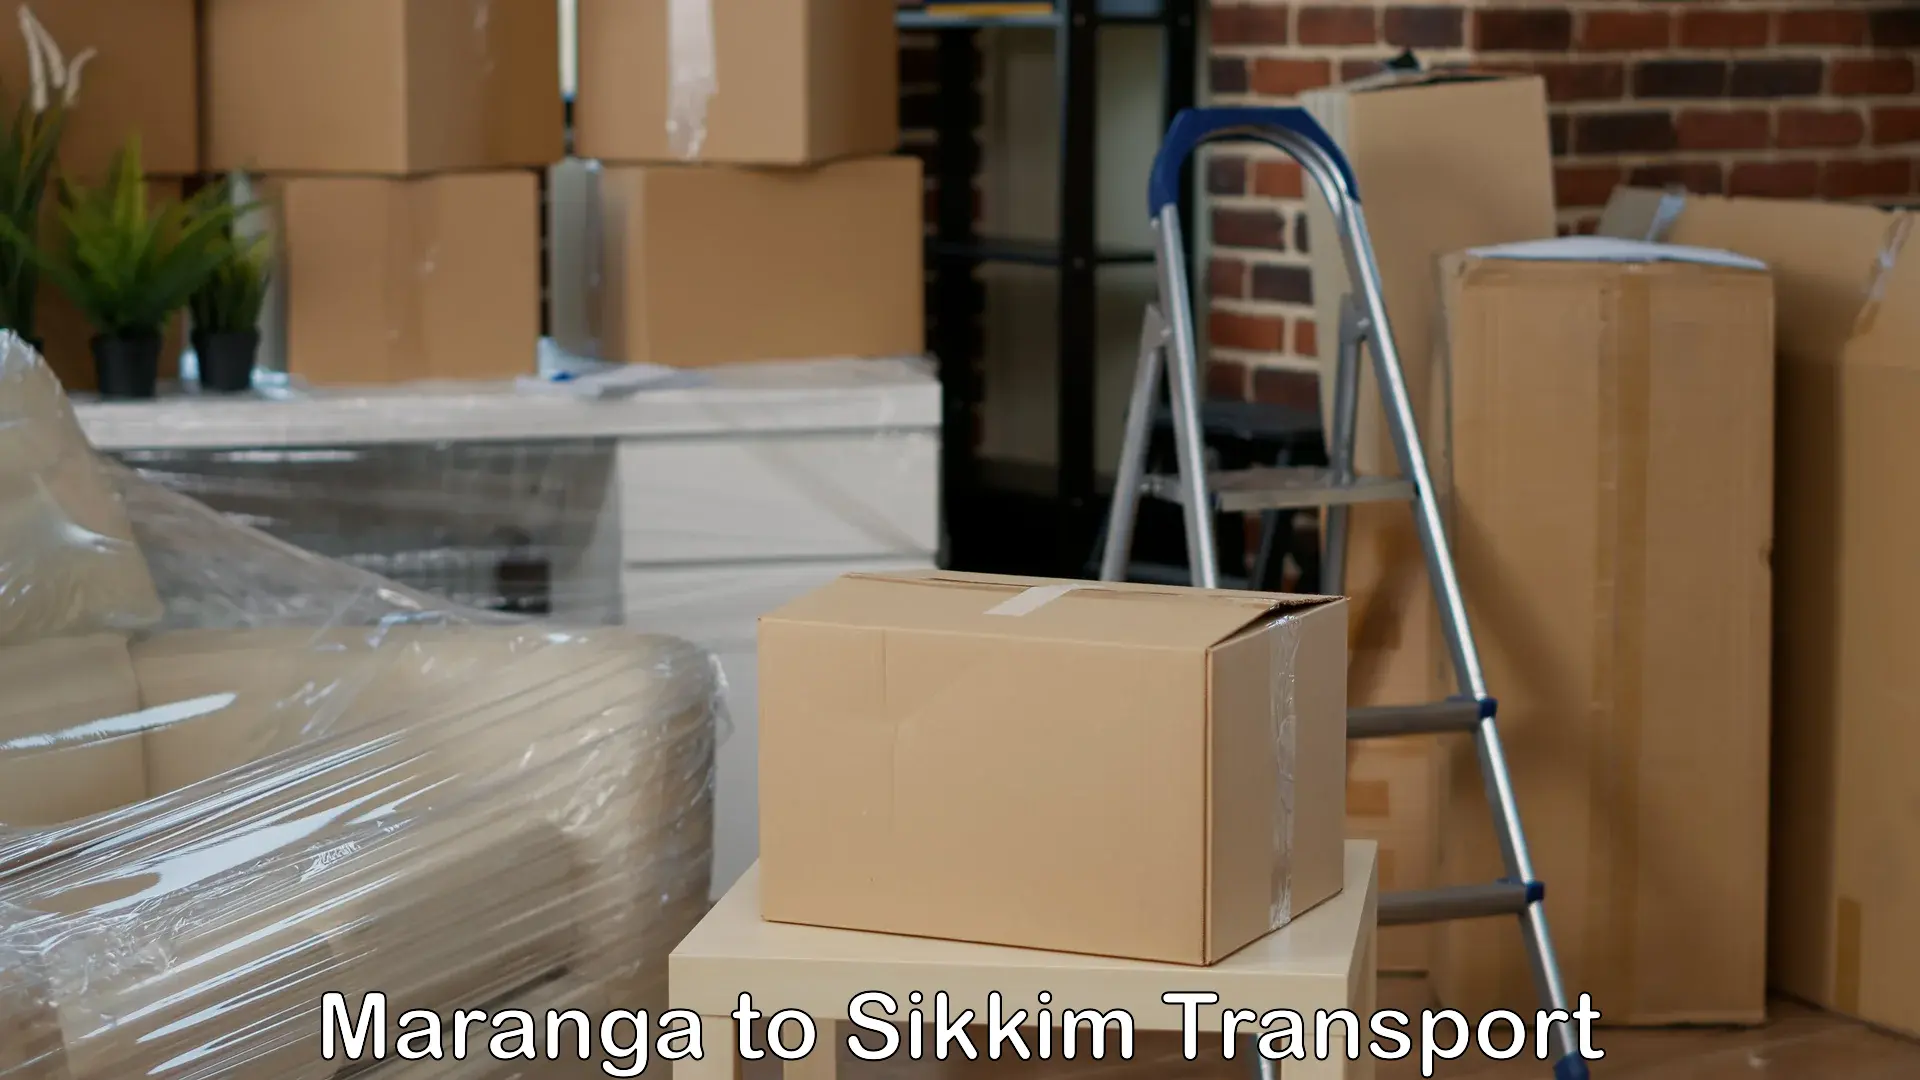 Furniture transport service Maranga to Pelling